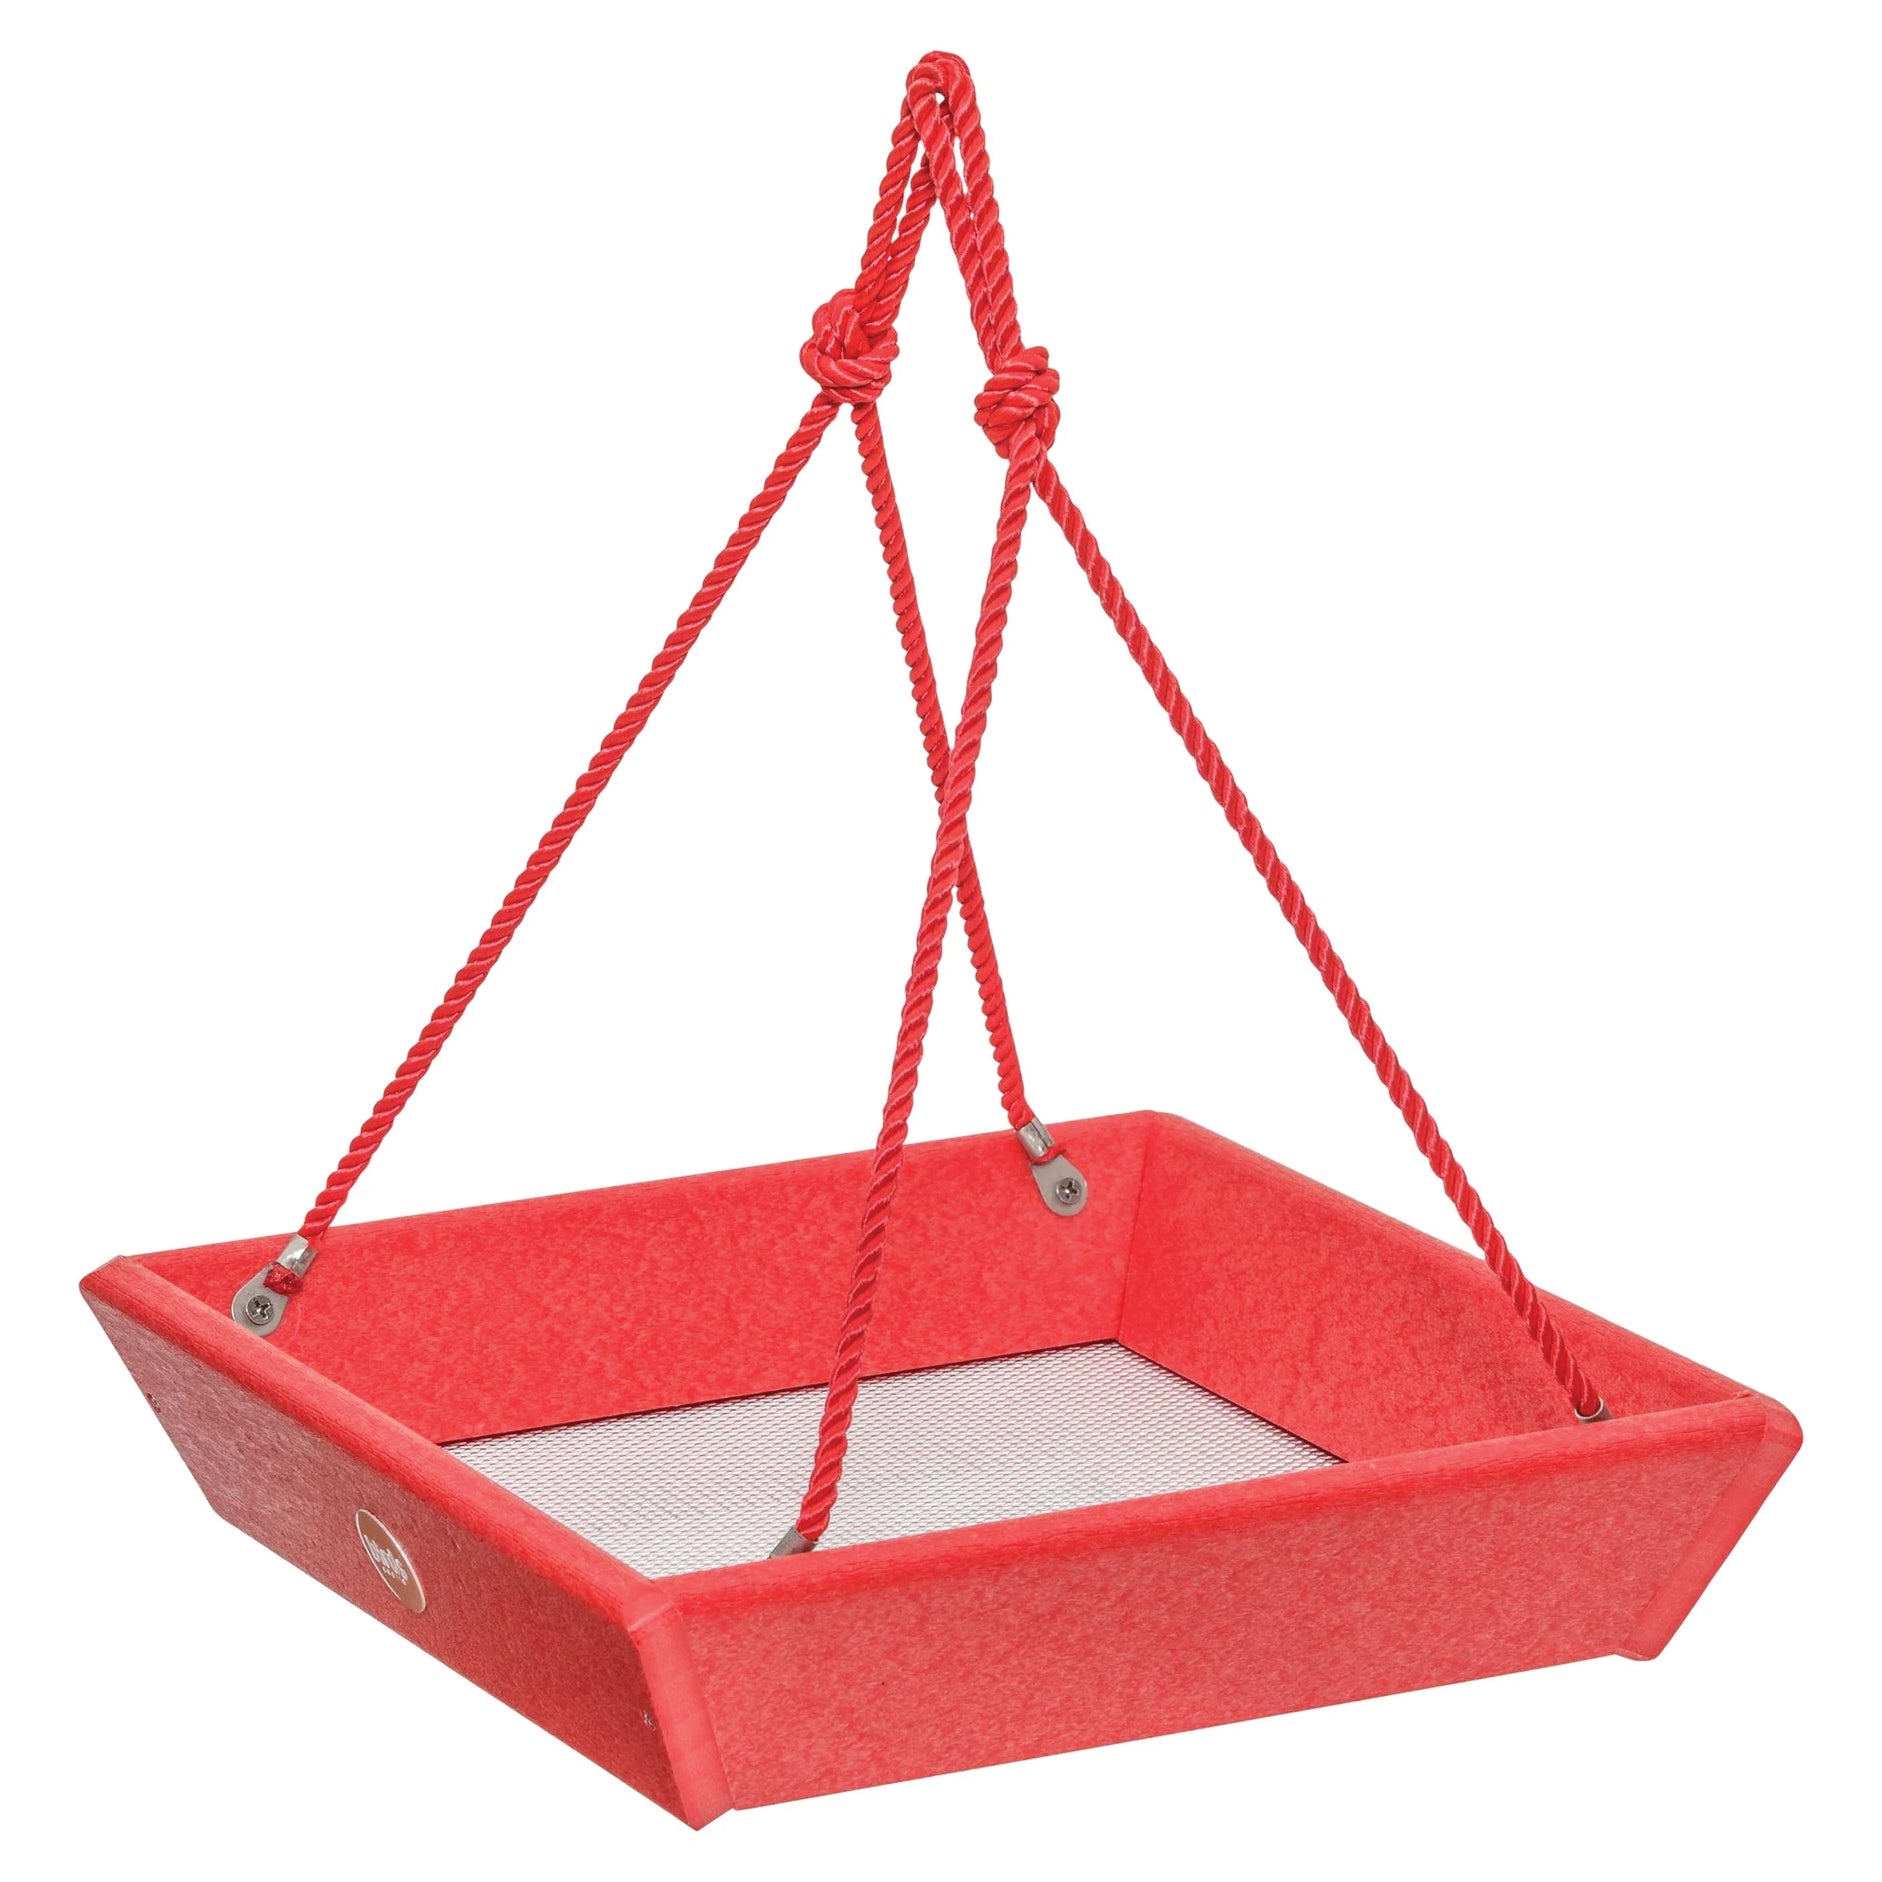 Hanging Tray Bird Feeder - Red